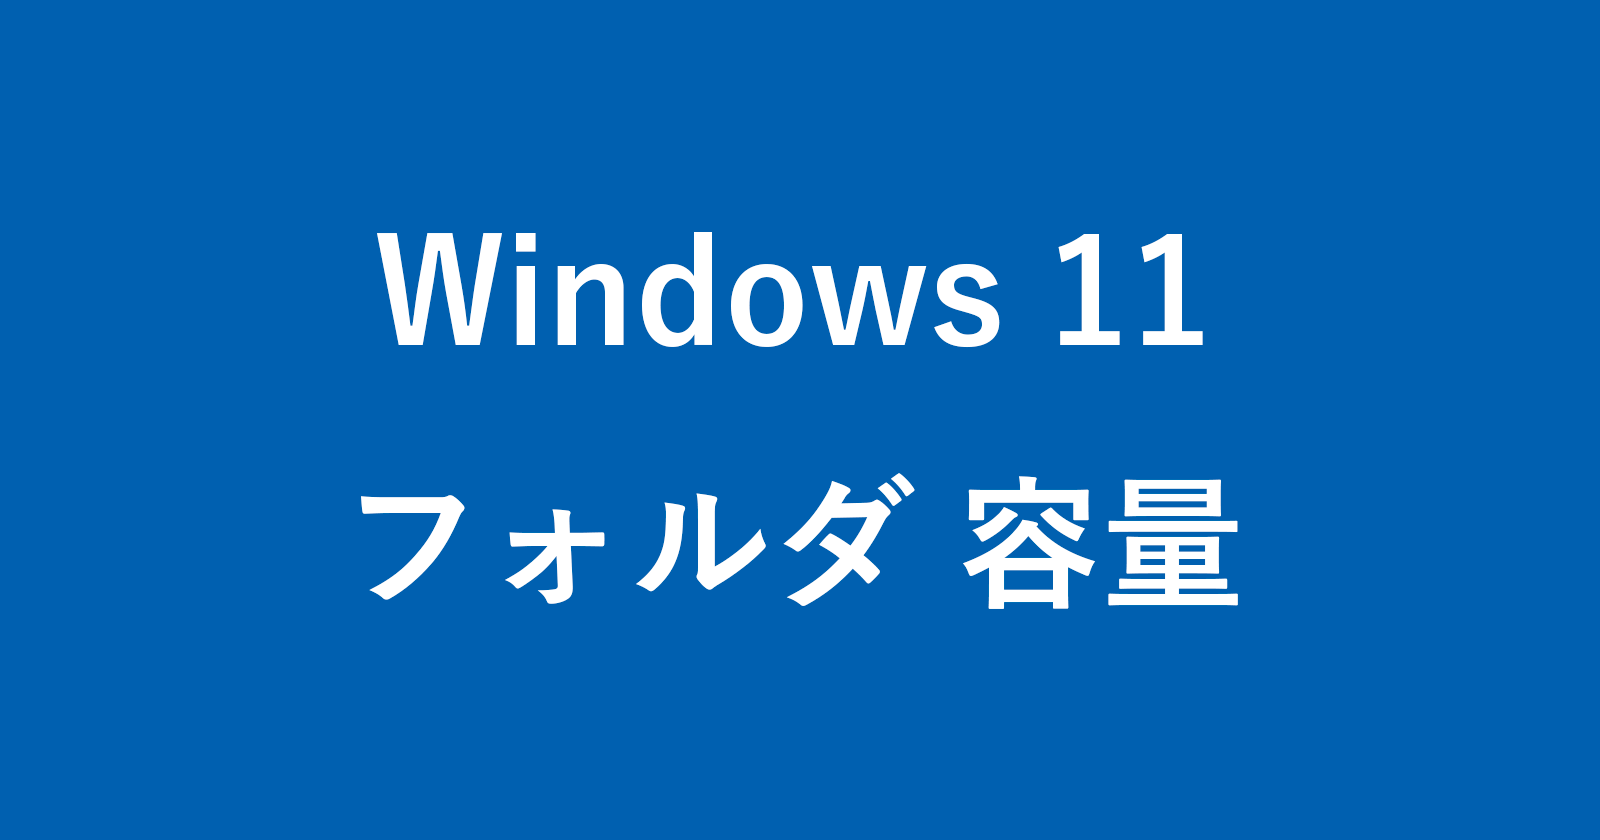 windows 11 folder size